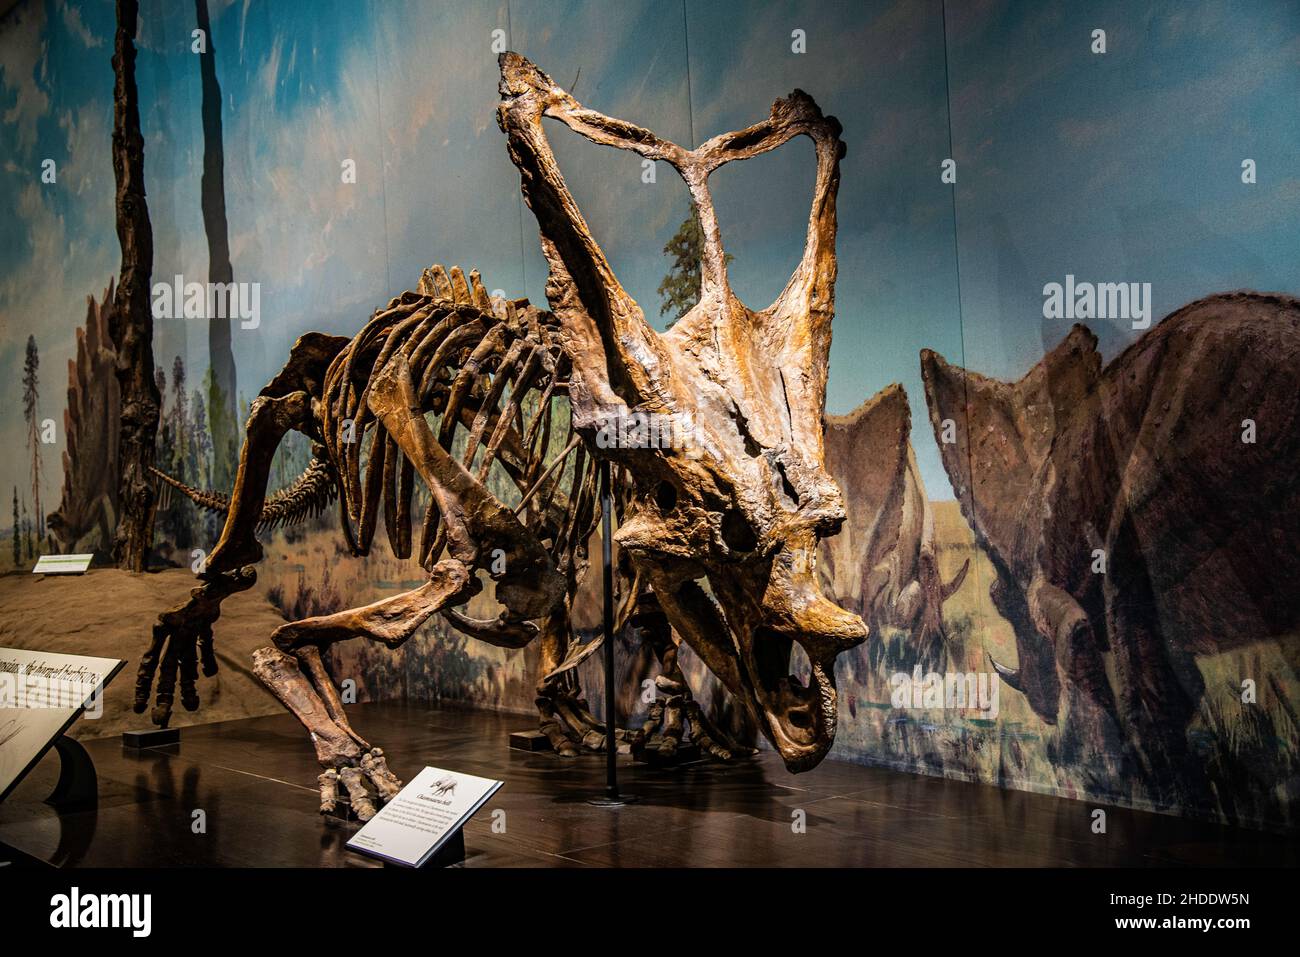 Royal Tyrrell Museum, Kanada - 21 2021. Dez.: Die gigantesken Dinosaures-Fossilien im Royal Tyrrell Museum Stockfoto